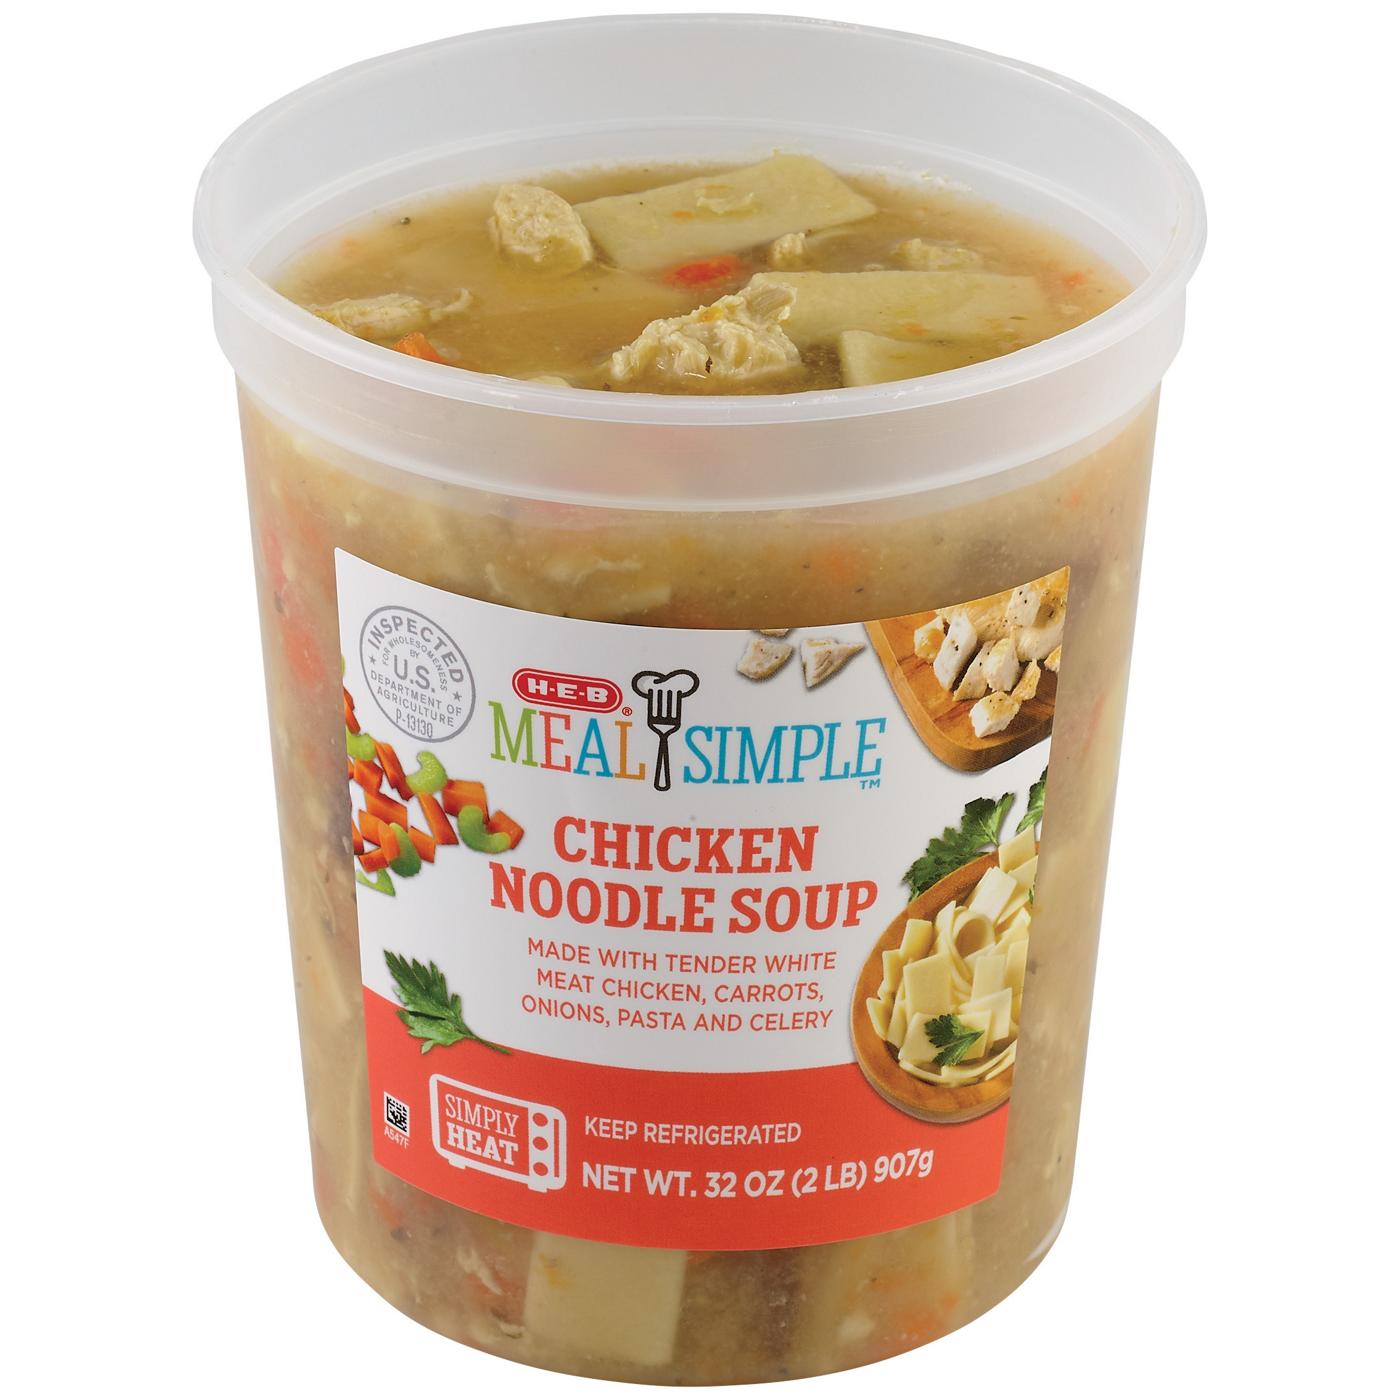 Meal Simple by H-E-B Chicken Noodle Soup - Family Size - Shop Soup at H-E-B